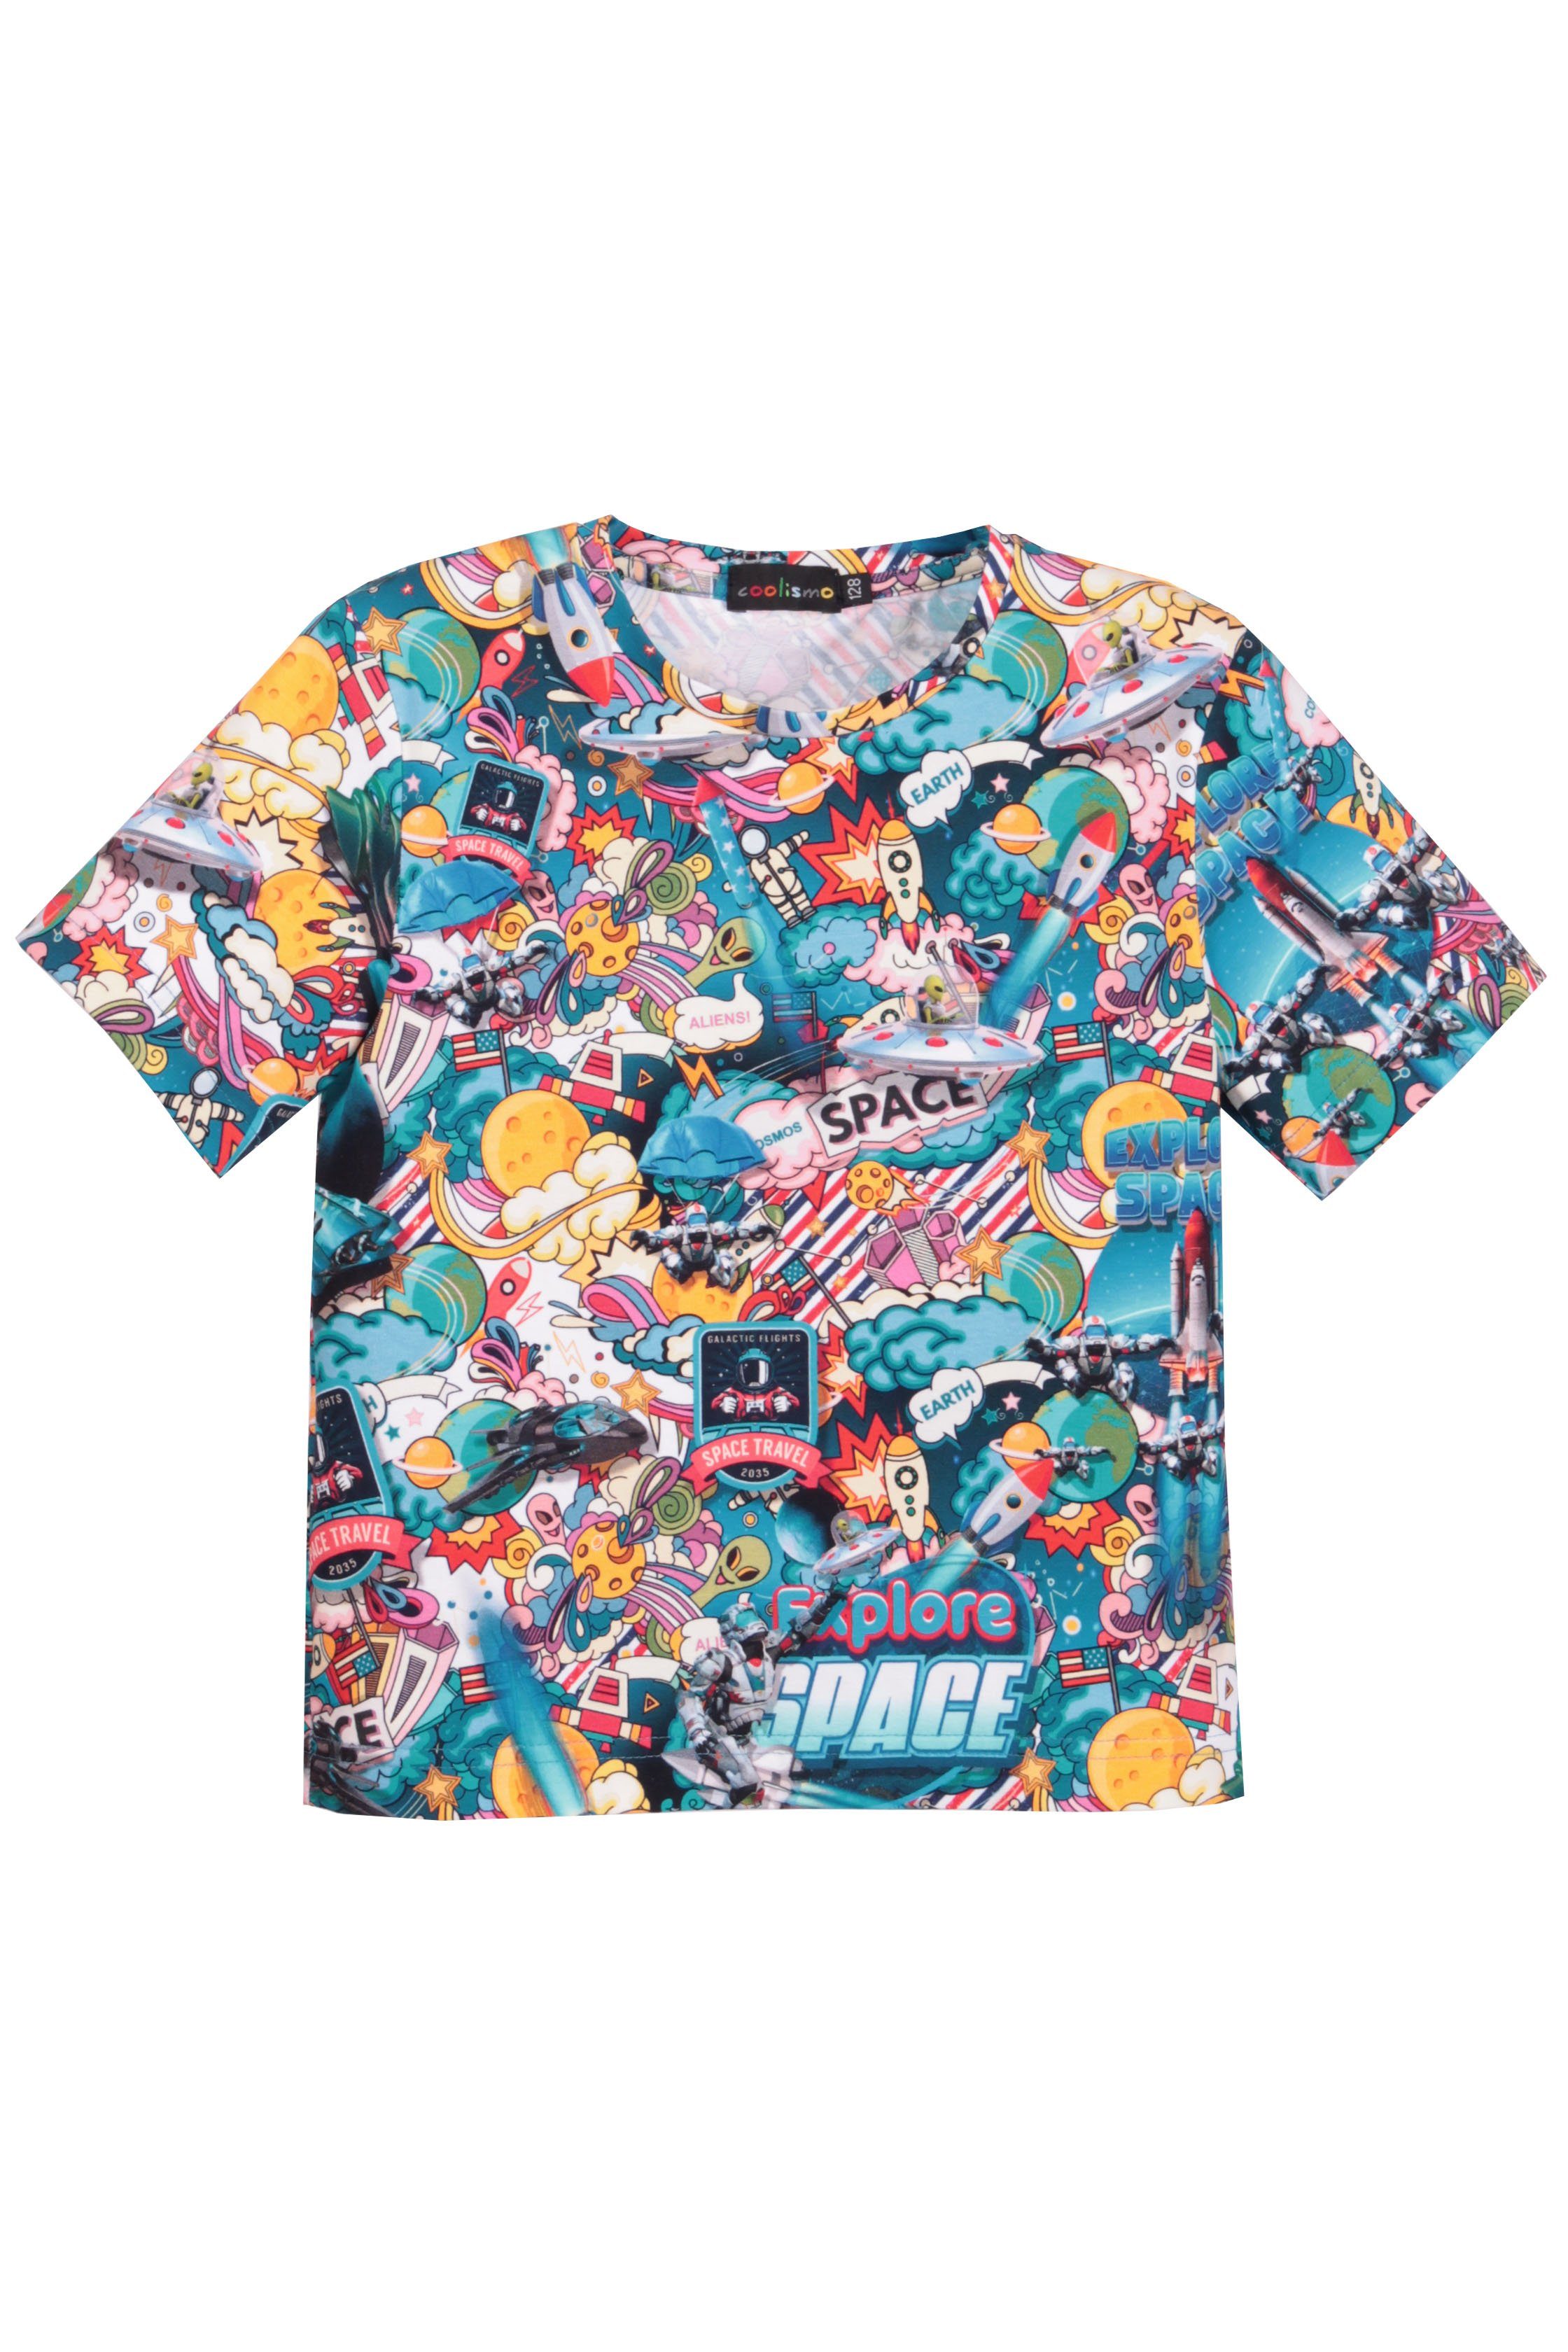 coolismo T-Shirt Print-Shirt für Jungen mit Comic-Raketen-Motiv Rundhalsauschnitt, Alloverprint, Baumwolle